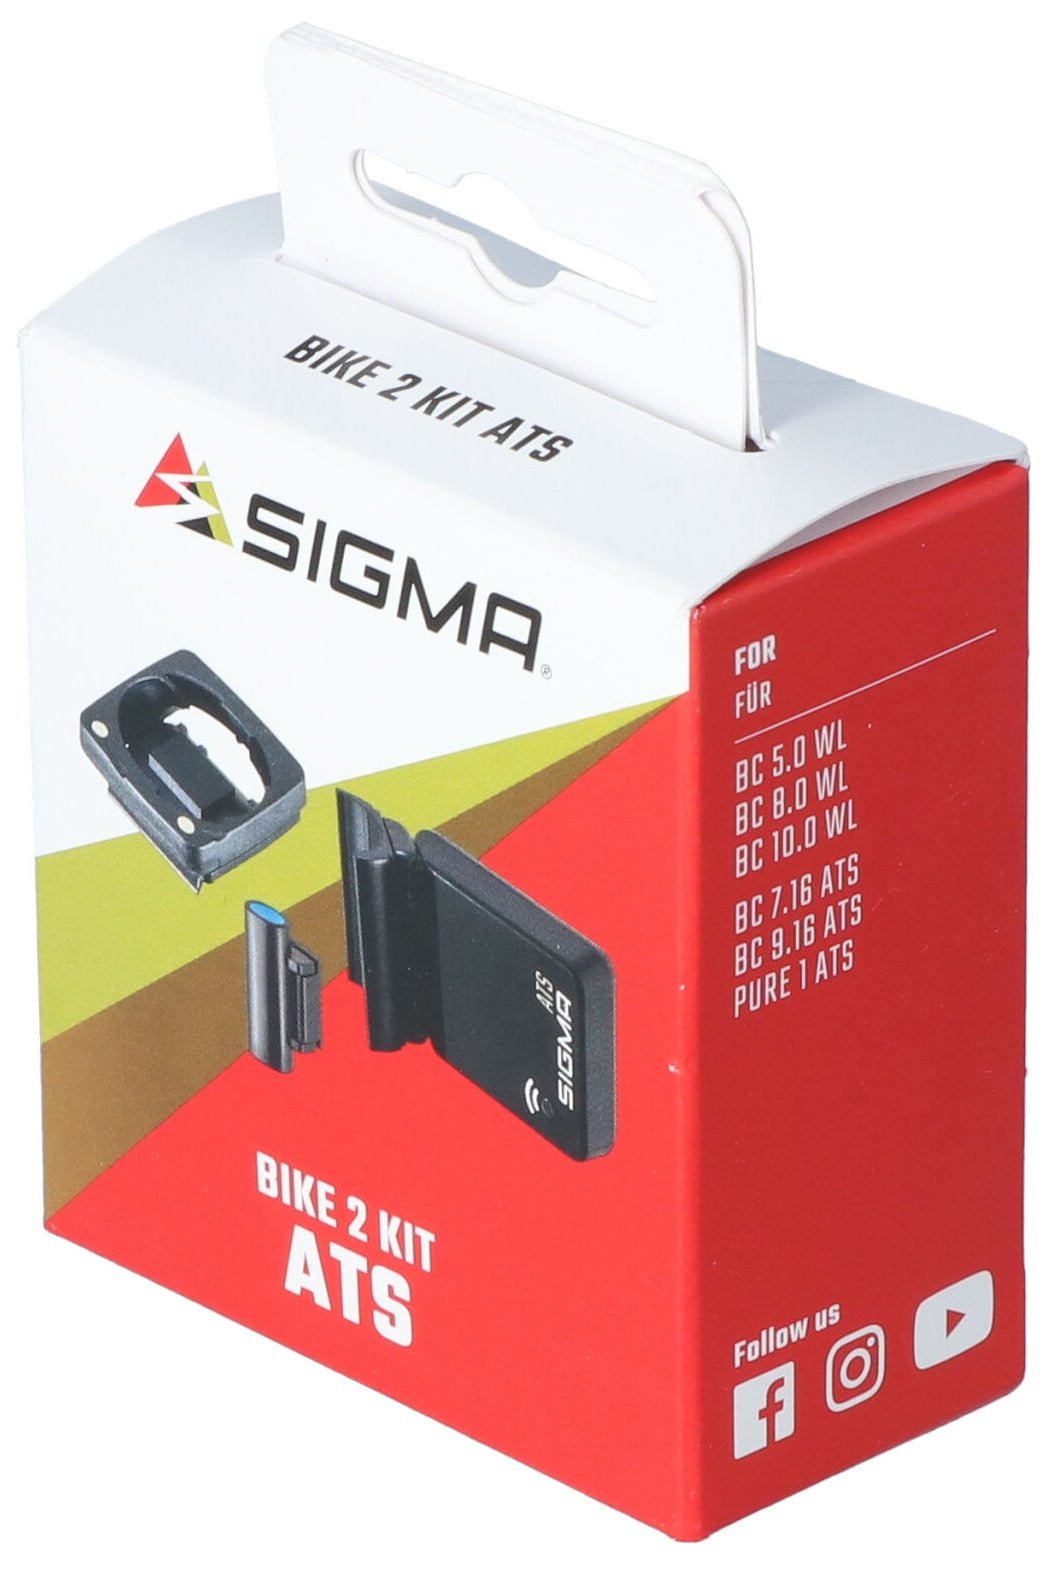 Snelheidszenderset Sigma ATS (sensor + magneet + houder)